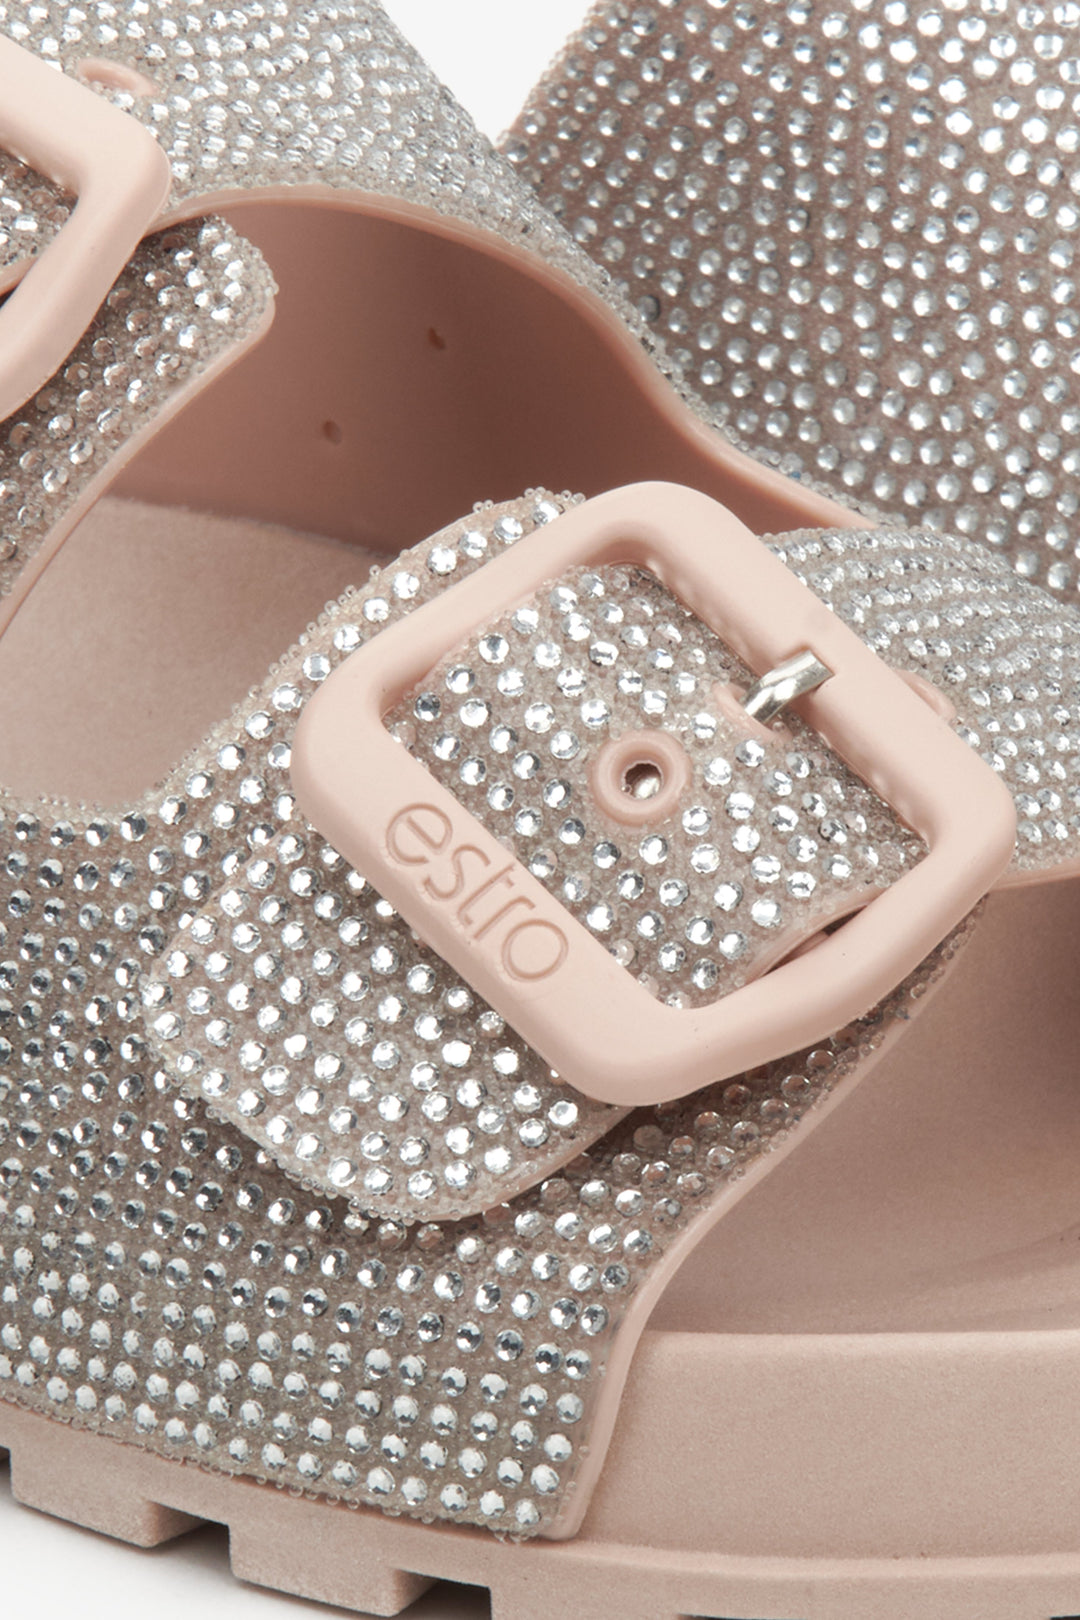 Women's light pink Estro flip-flops with rhinestones - close-up on details.